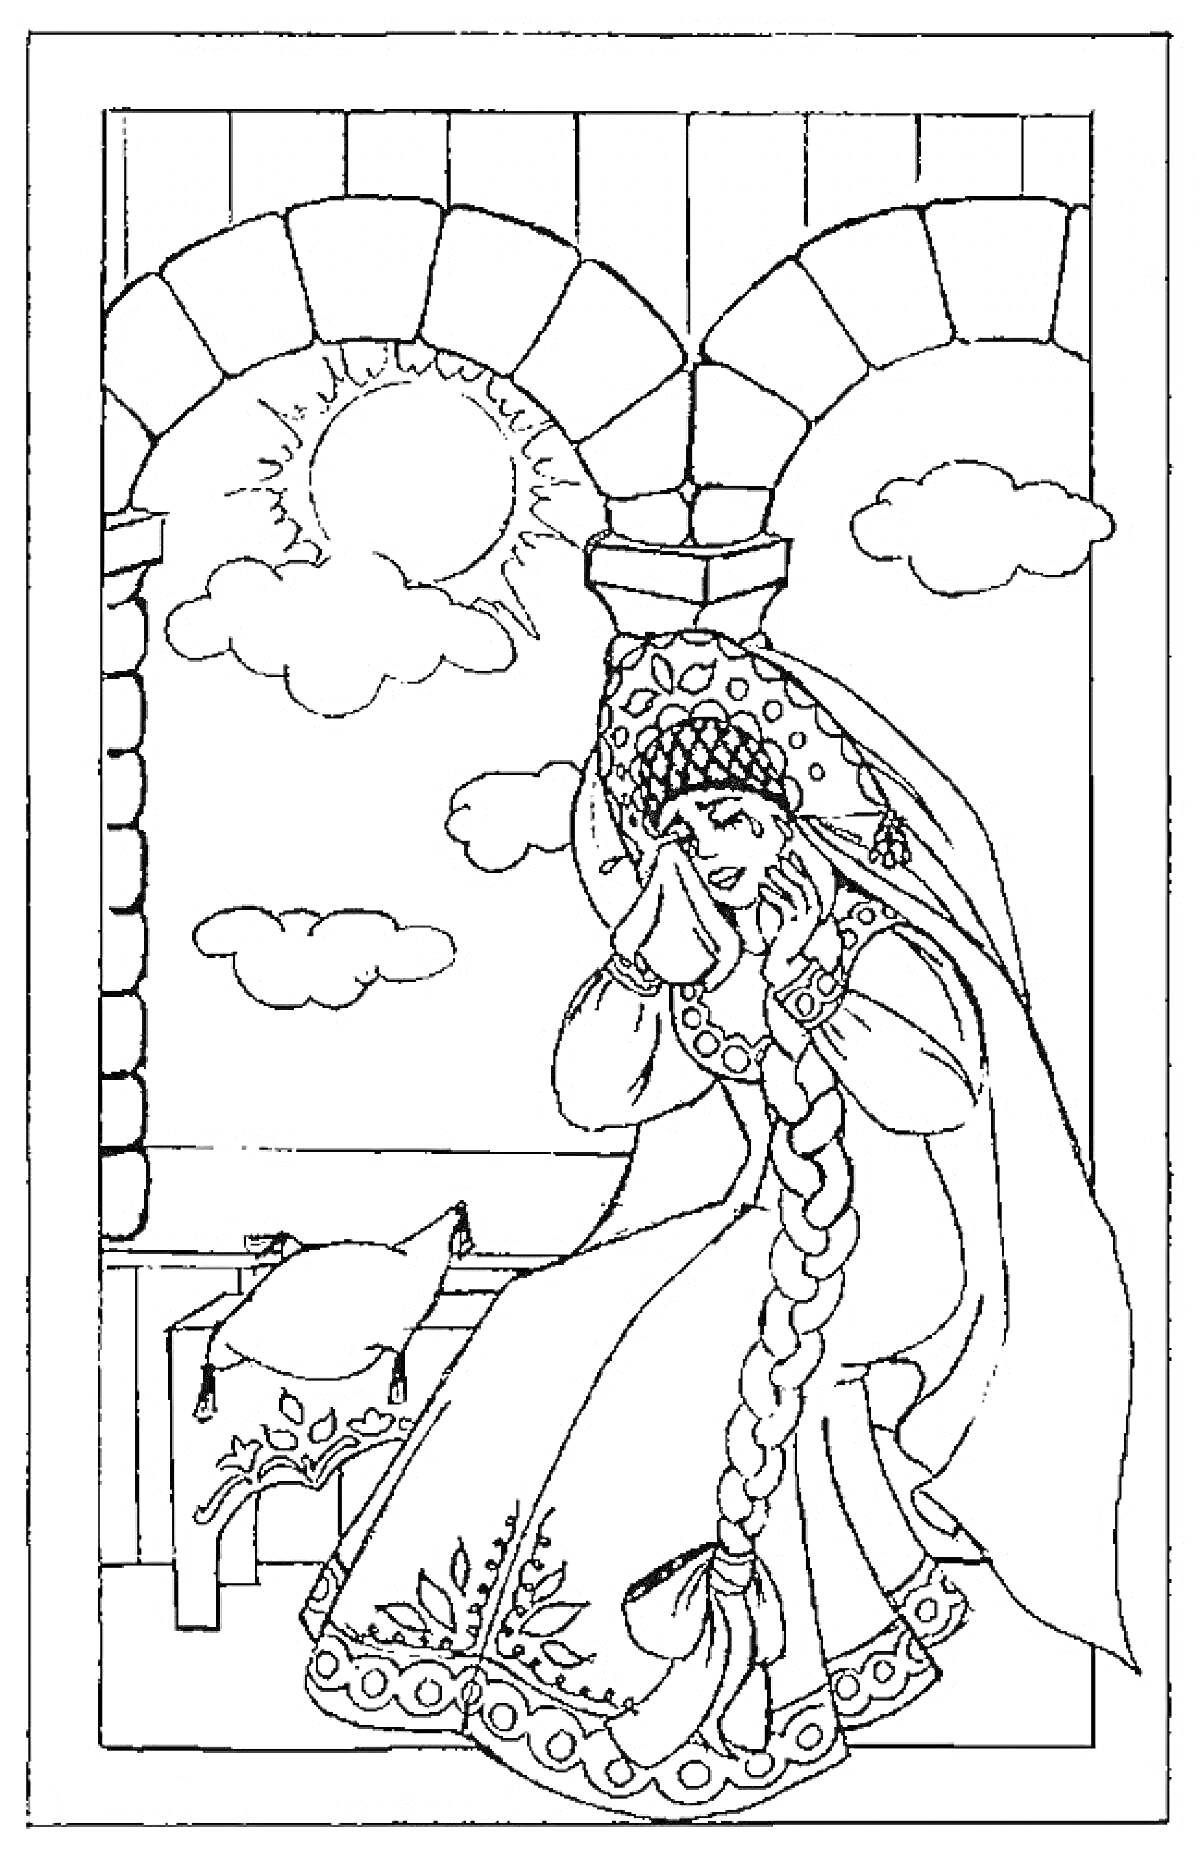 На раскраске изображено: Принцесса, Длинная коса, Сон, Облака, Солнце, Подушка, Платье, Корона, Окна, Арка